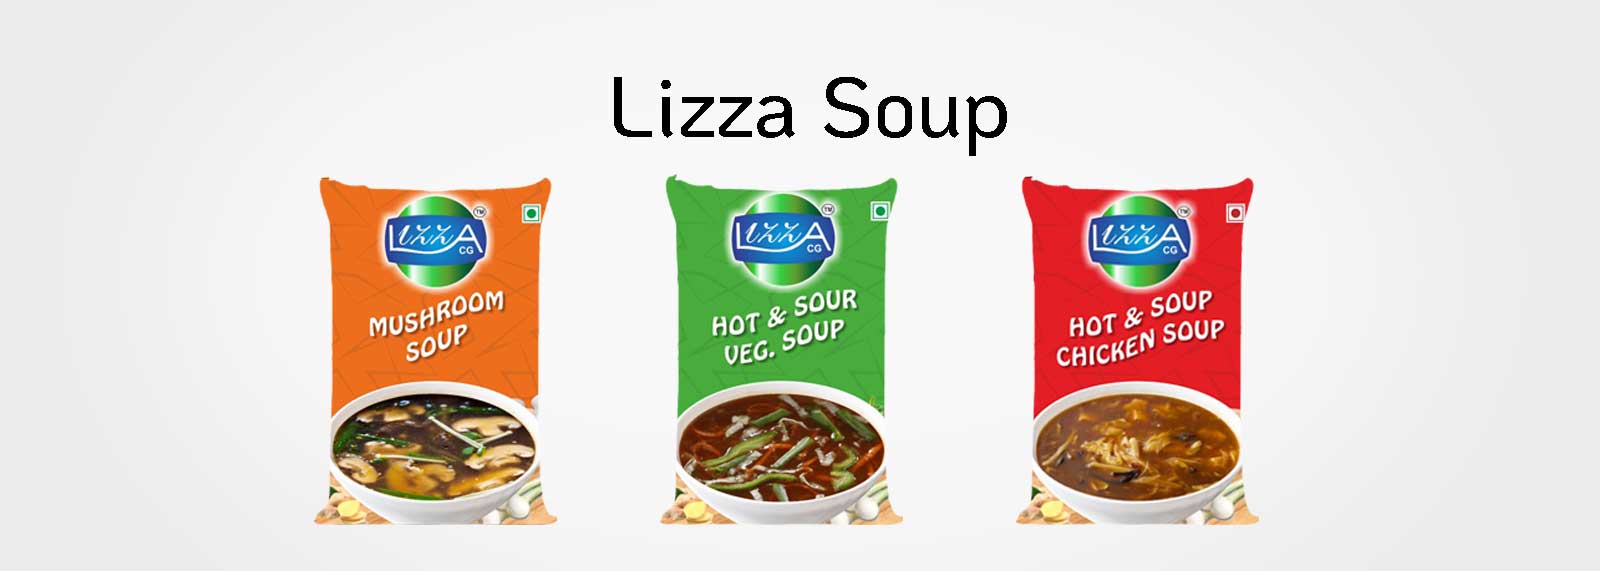 Lizaa Soup